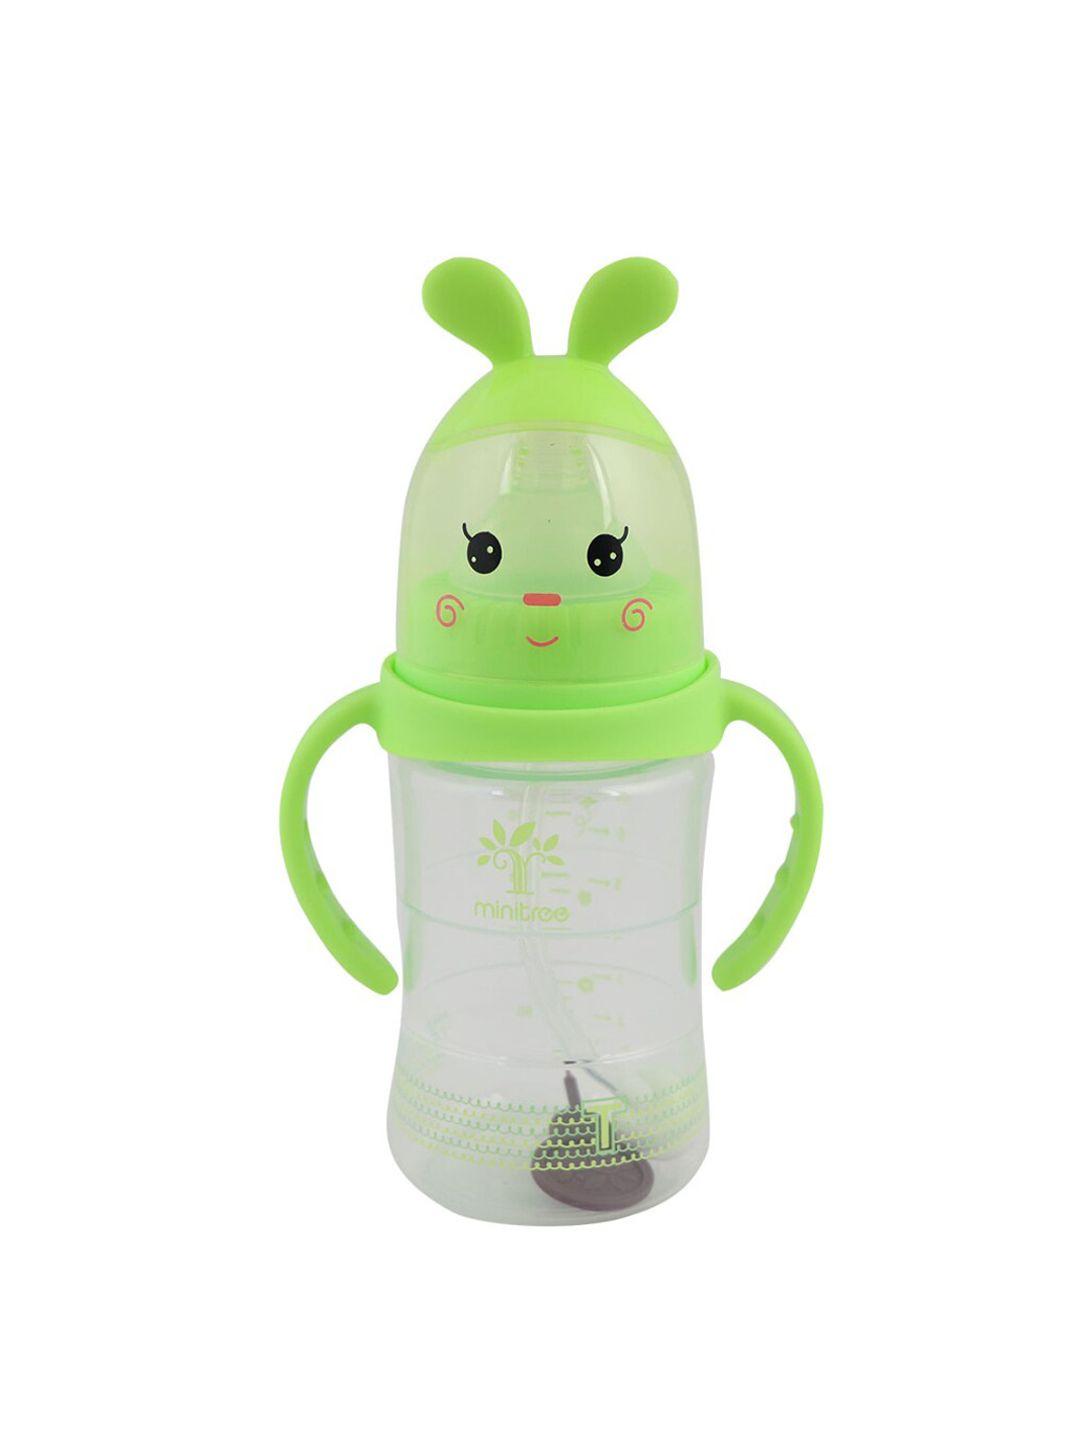 guchigu green baby bpa free feeding bottles with handle 210ml - 9012c